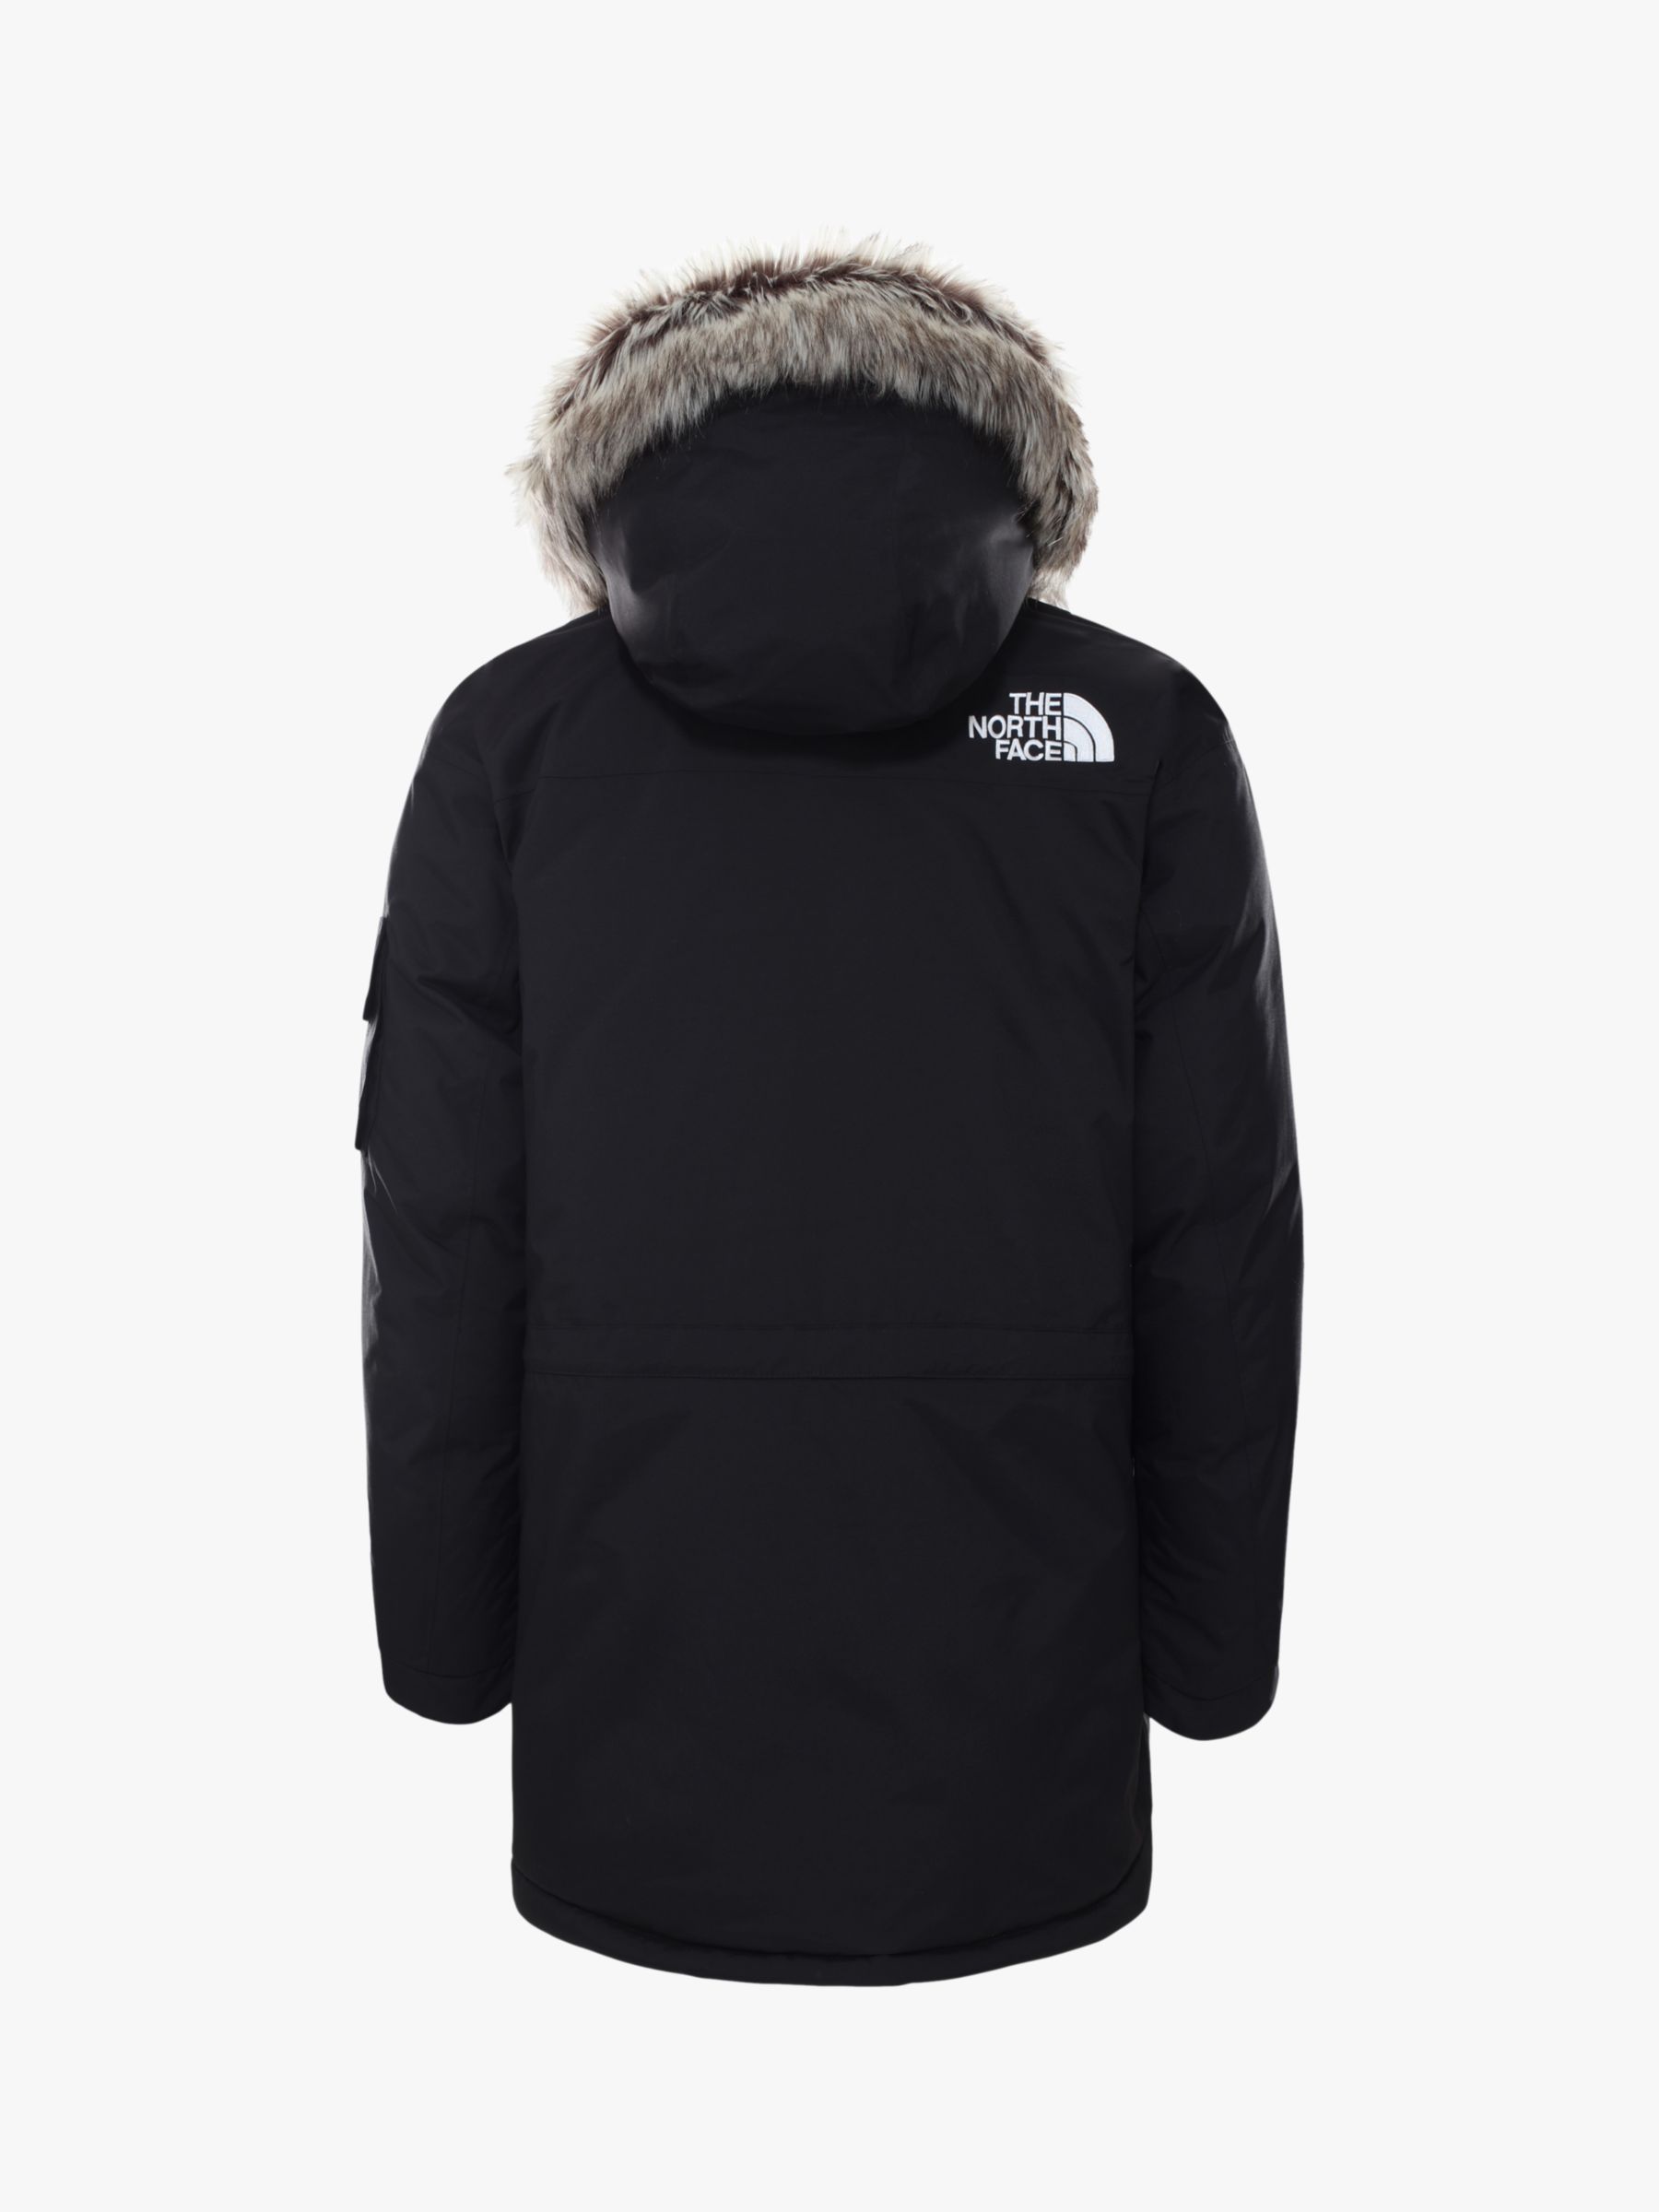 The North Face McMurdo Parka Jacket, Black